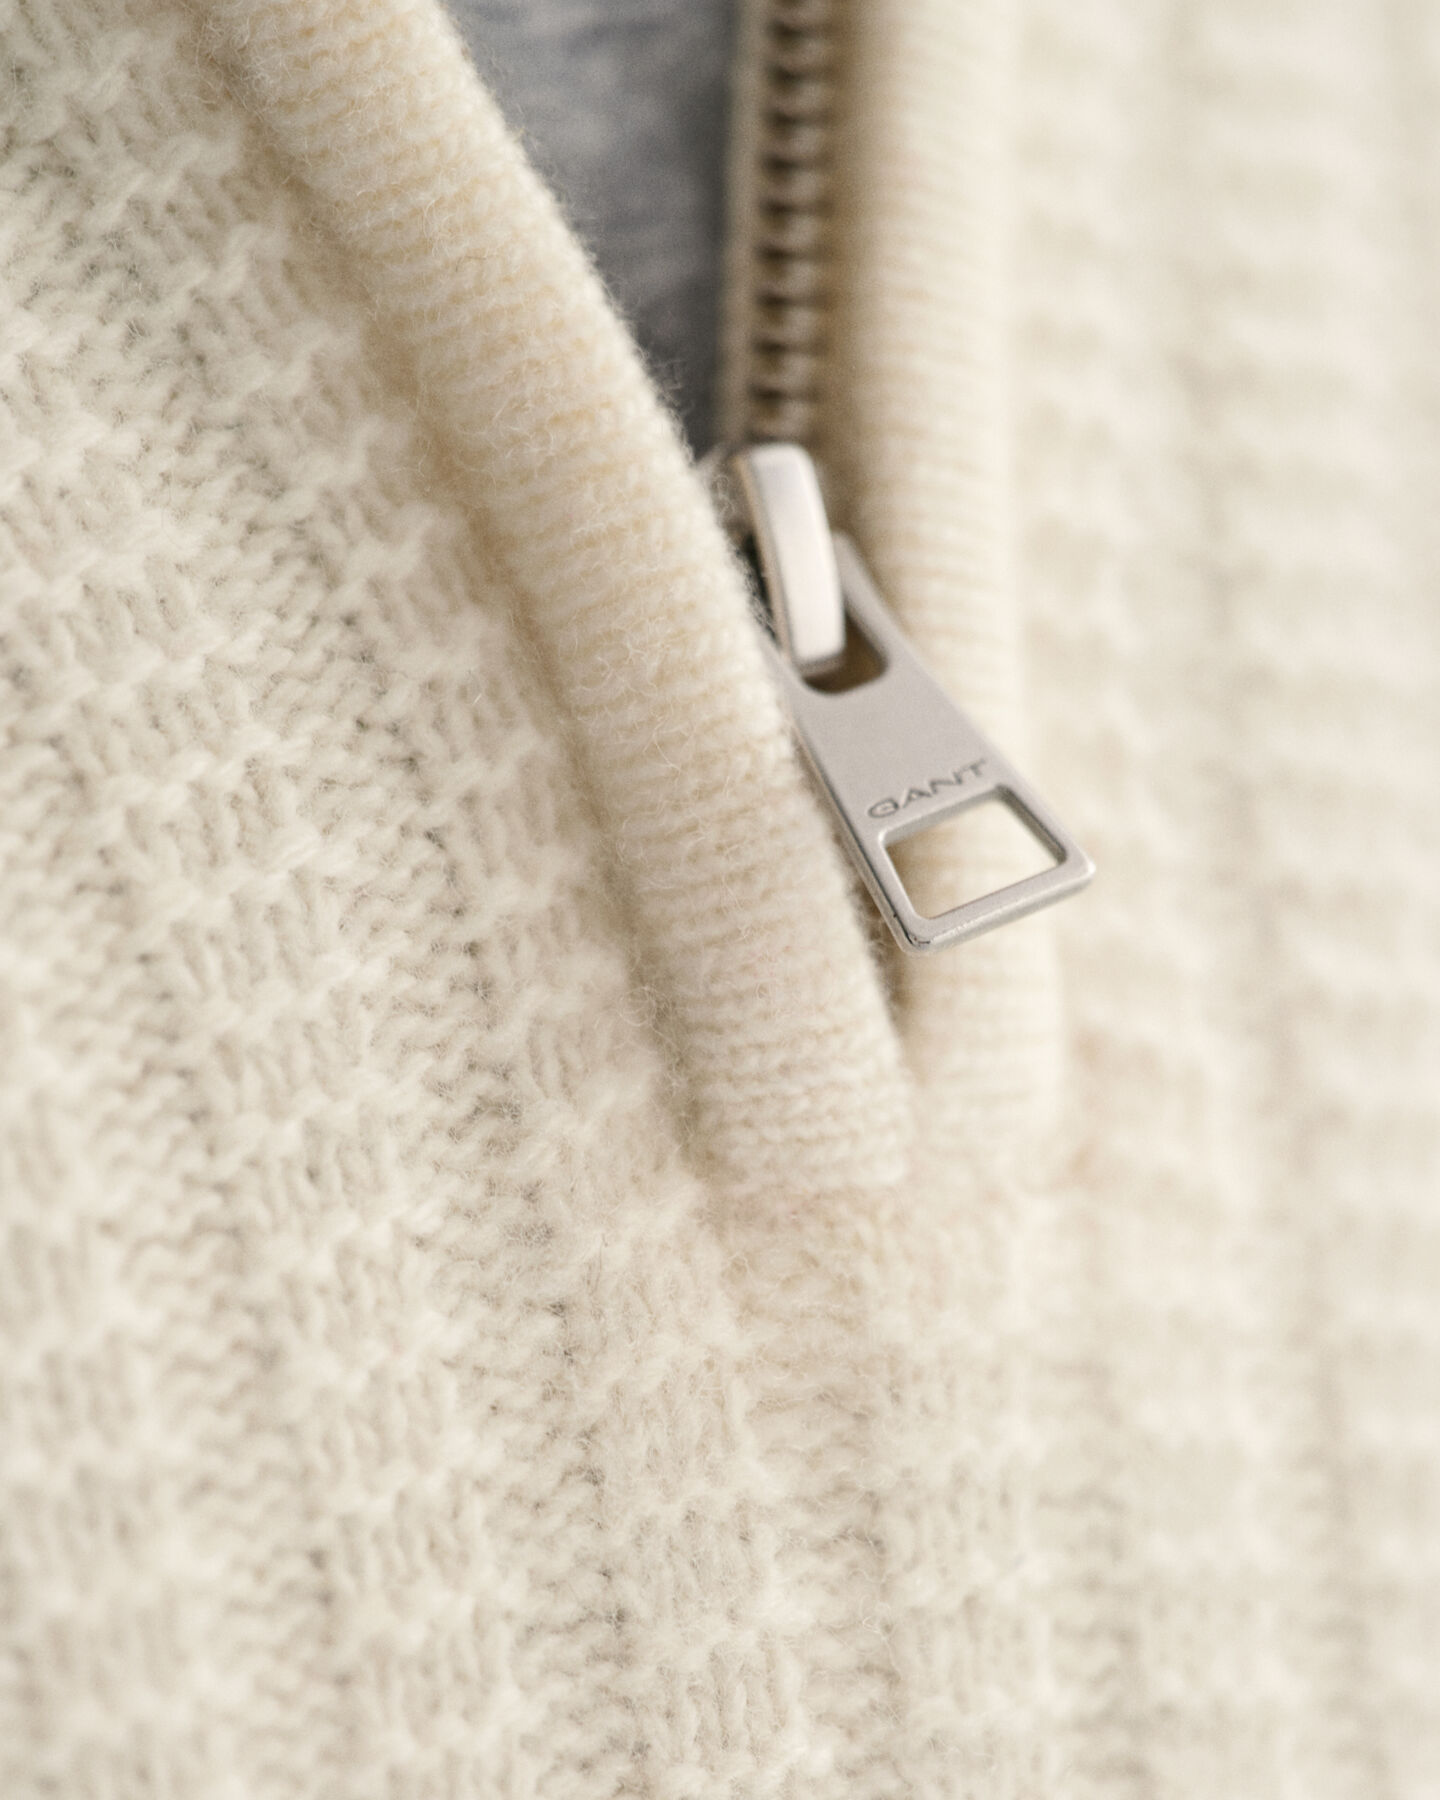 Casa Moda - Half Zip Textured Knit Sweater - 100% Cotton - 413710500 - 